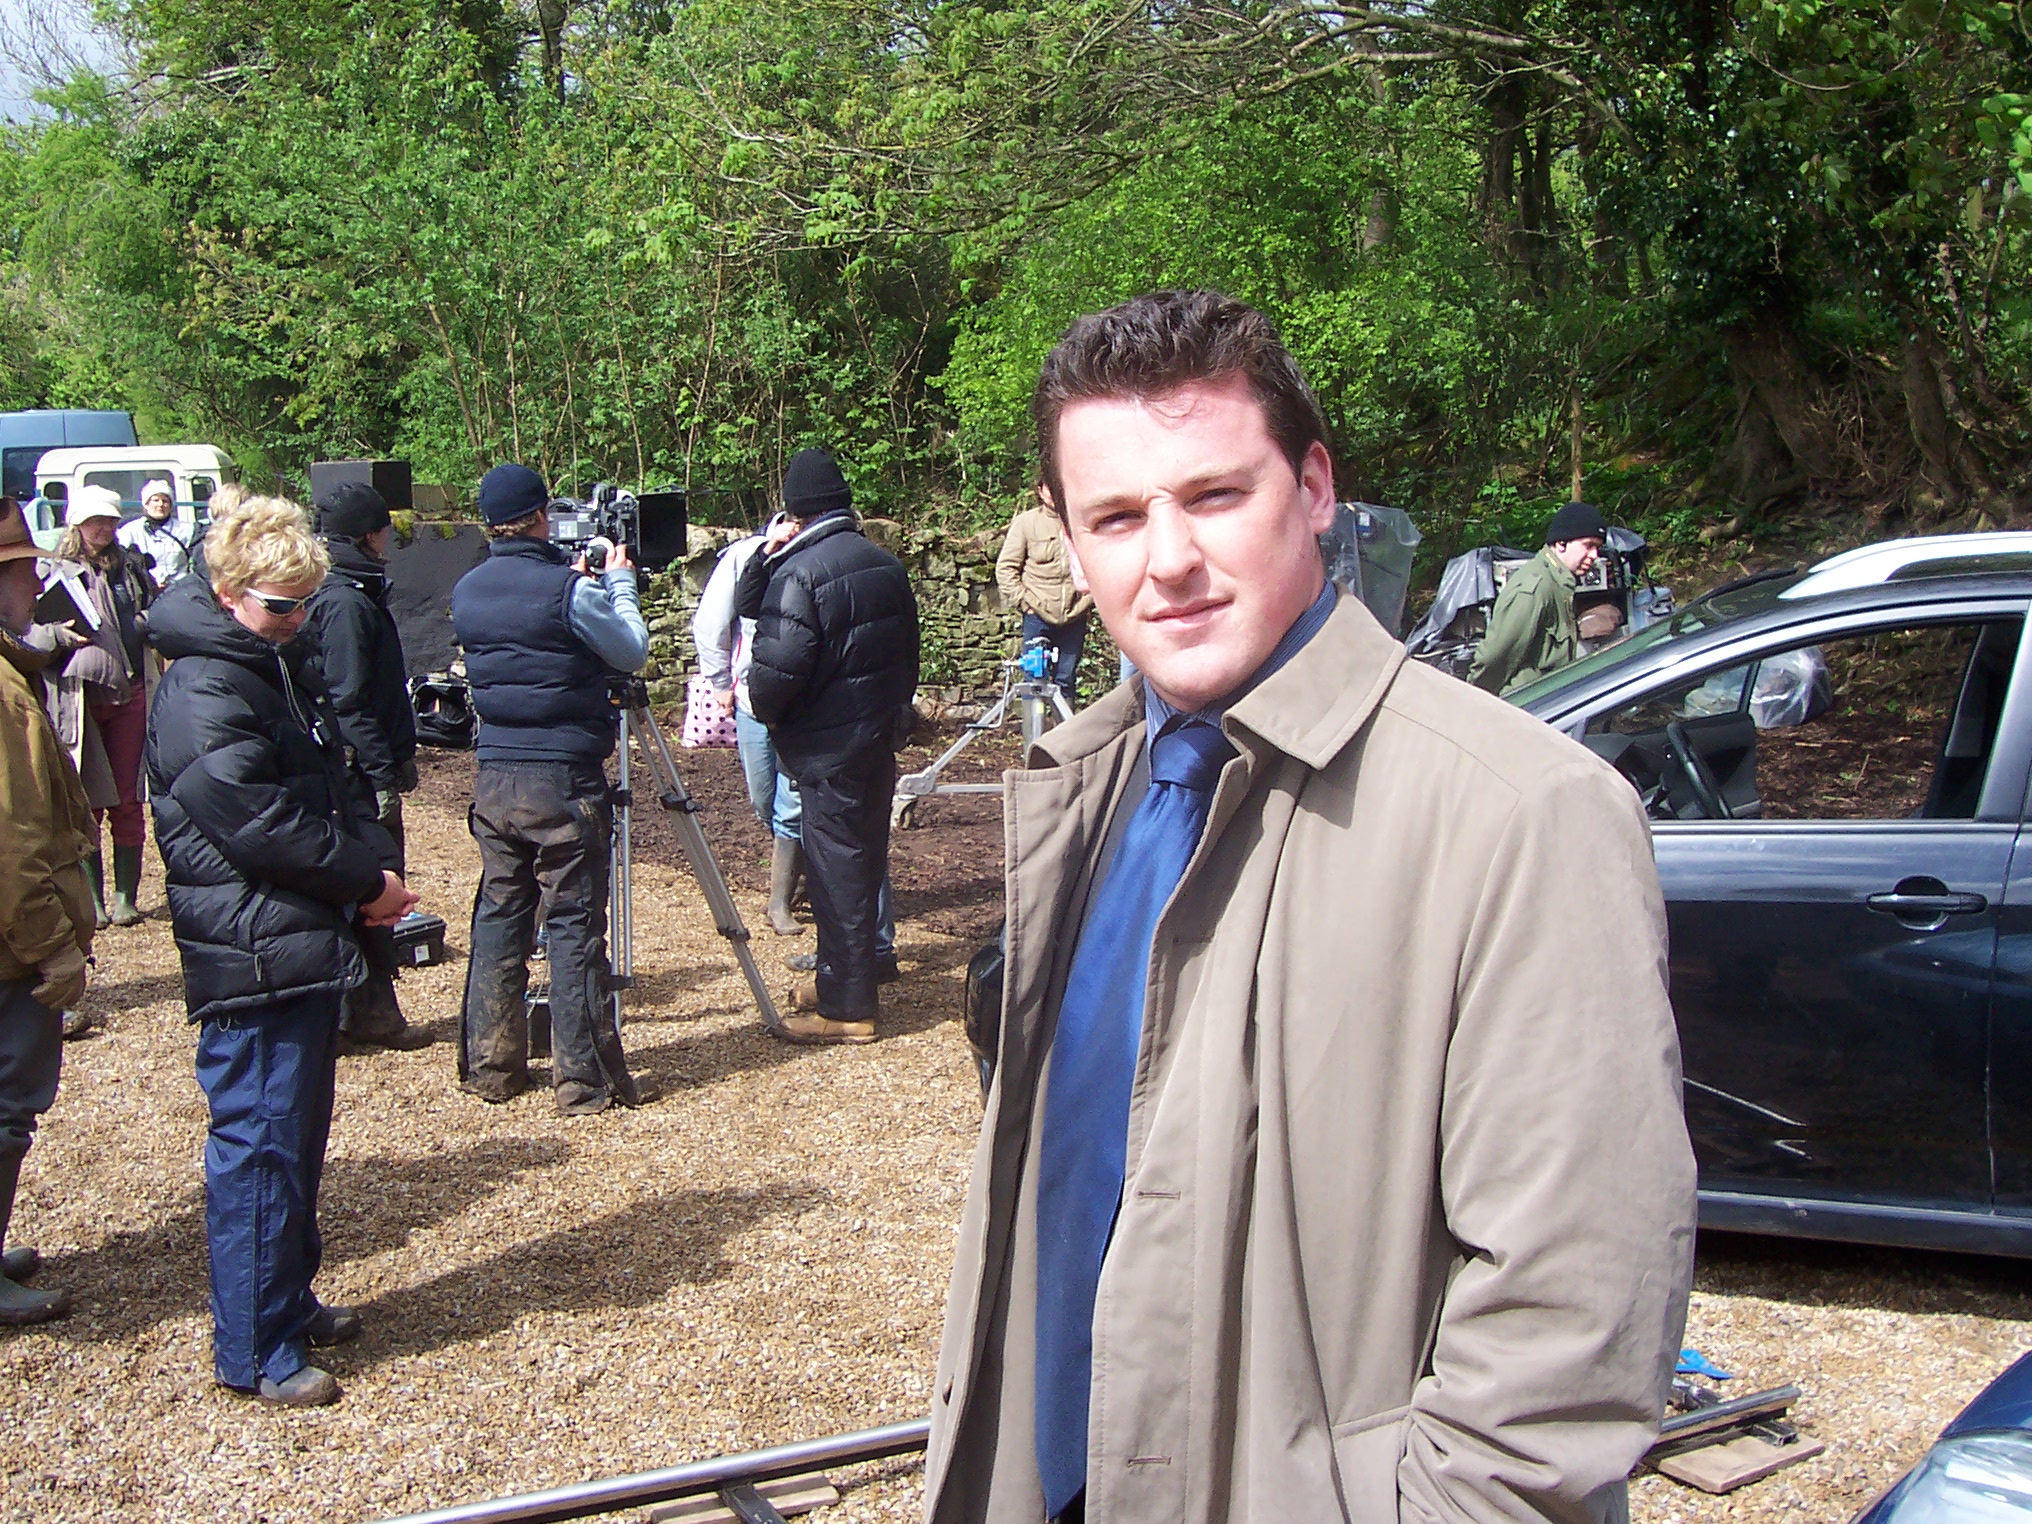 Declan Reynolds as MR KINGSTON (Estate Agent) on Nicolas Roeg's PUFFBALL (2008). On set May 2006.